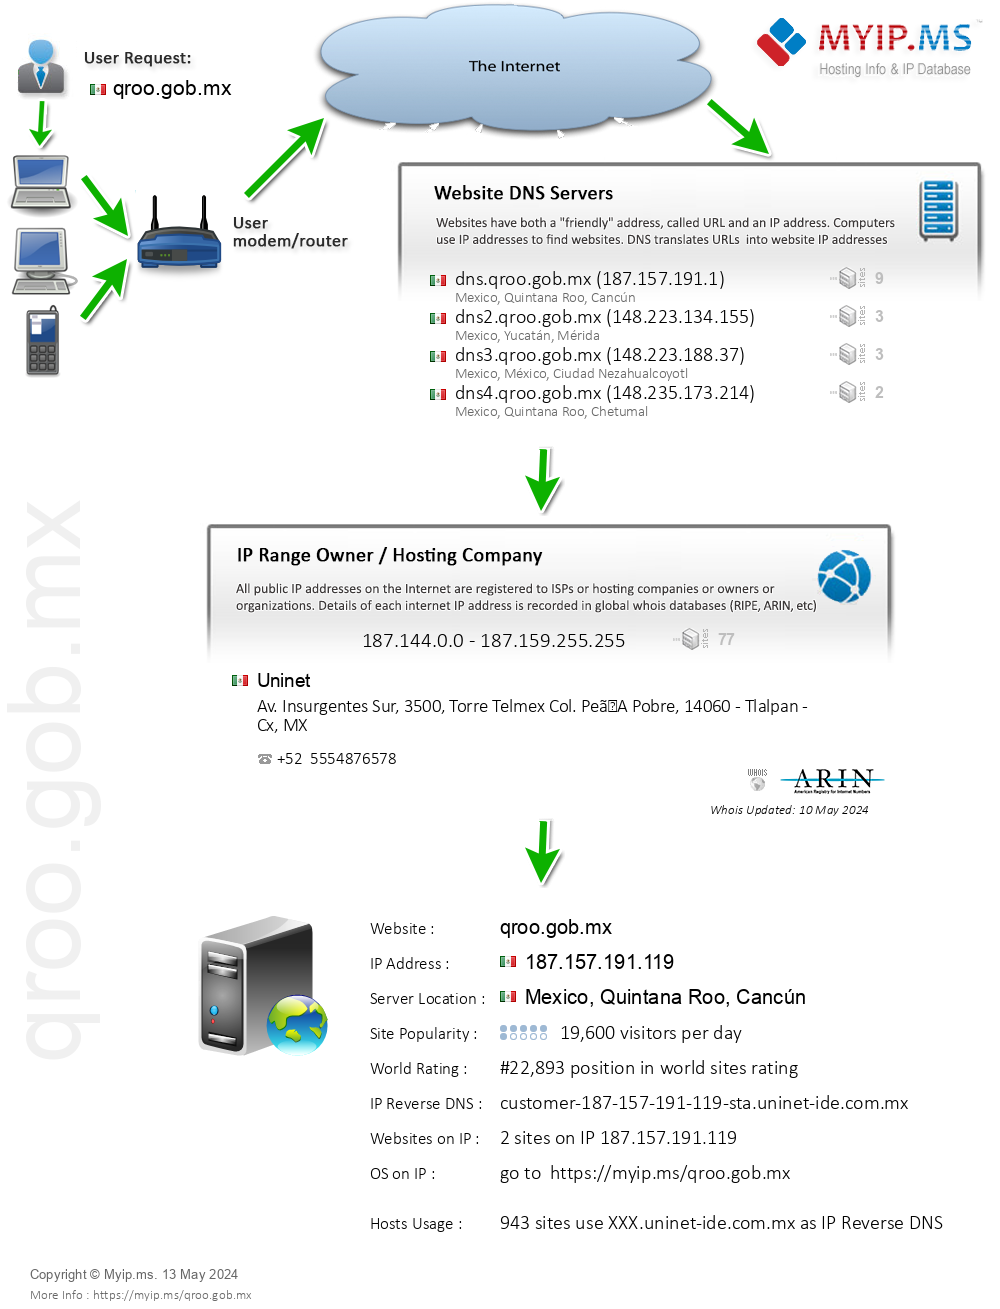 Qroo.gob.mx - Website Hosting Visual IP Diagram